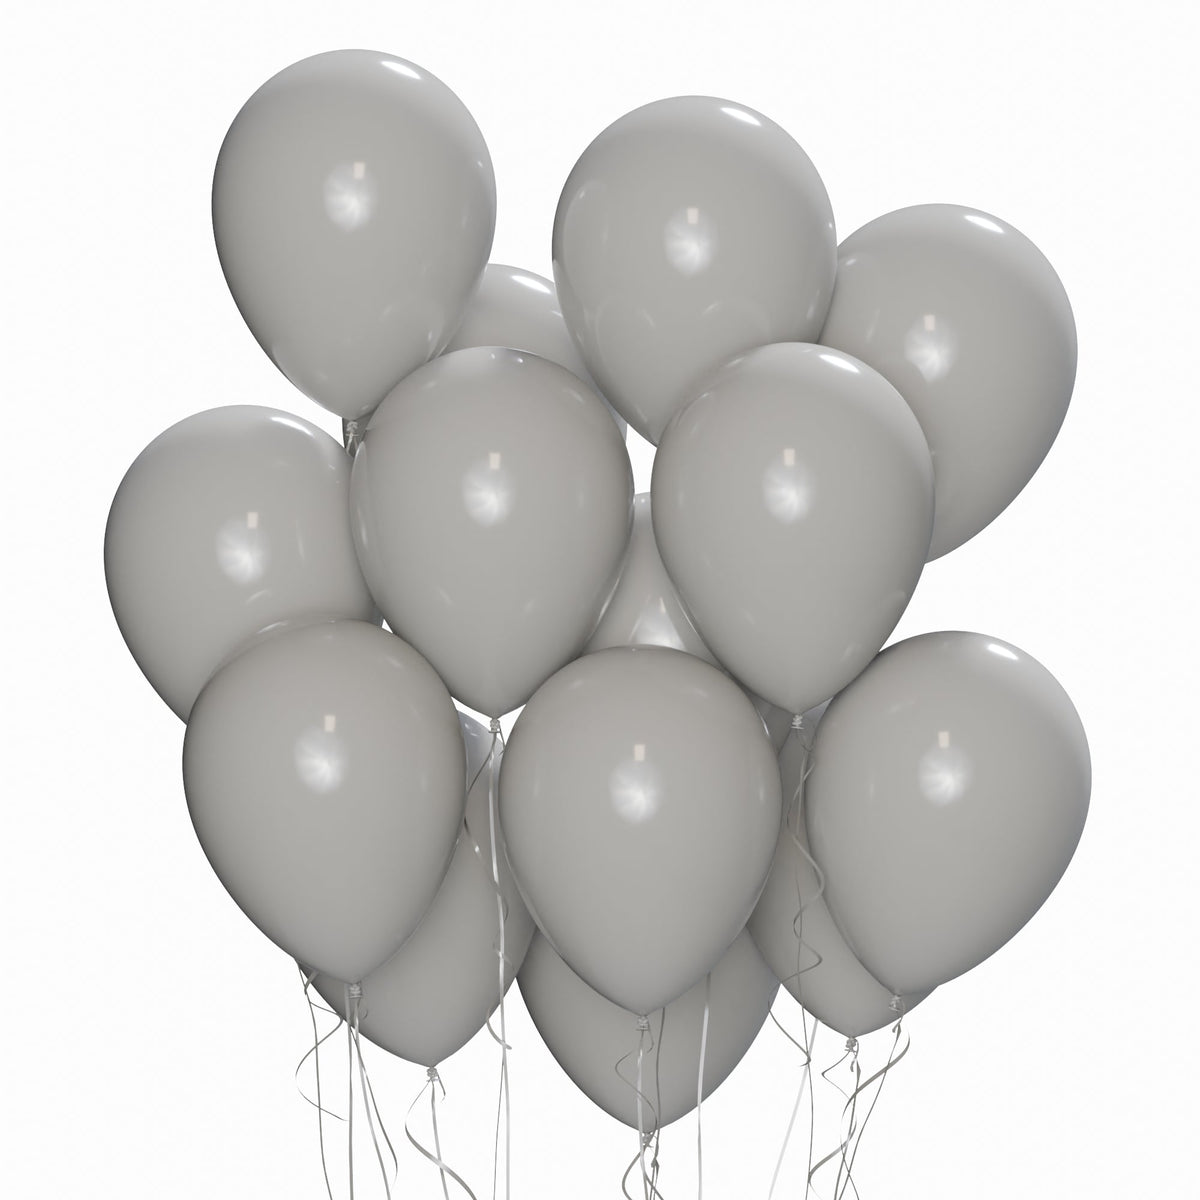 WIDE OCEAN INTERNATIONAL TRADE BEIJING CO., LTD Balloons Grey Latex Balloon 12 Inches, 15 Count 810064198168